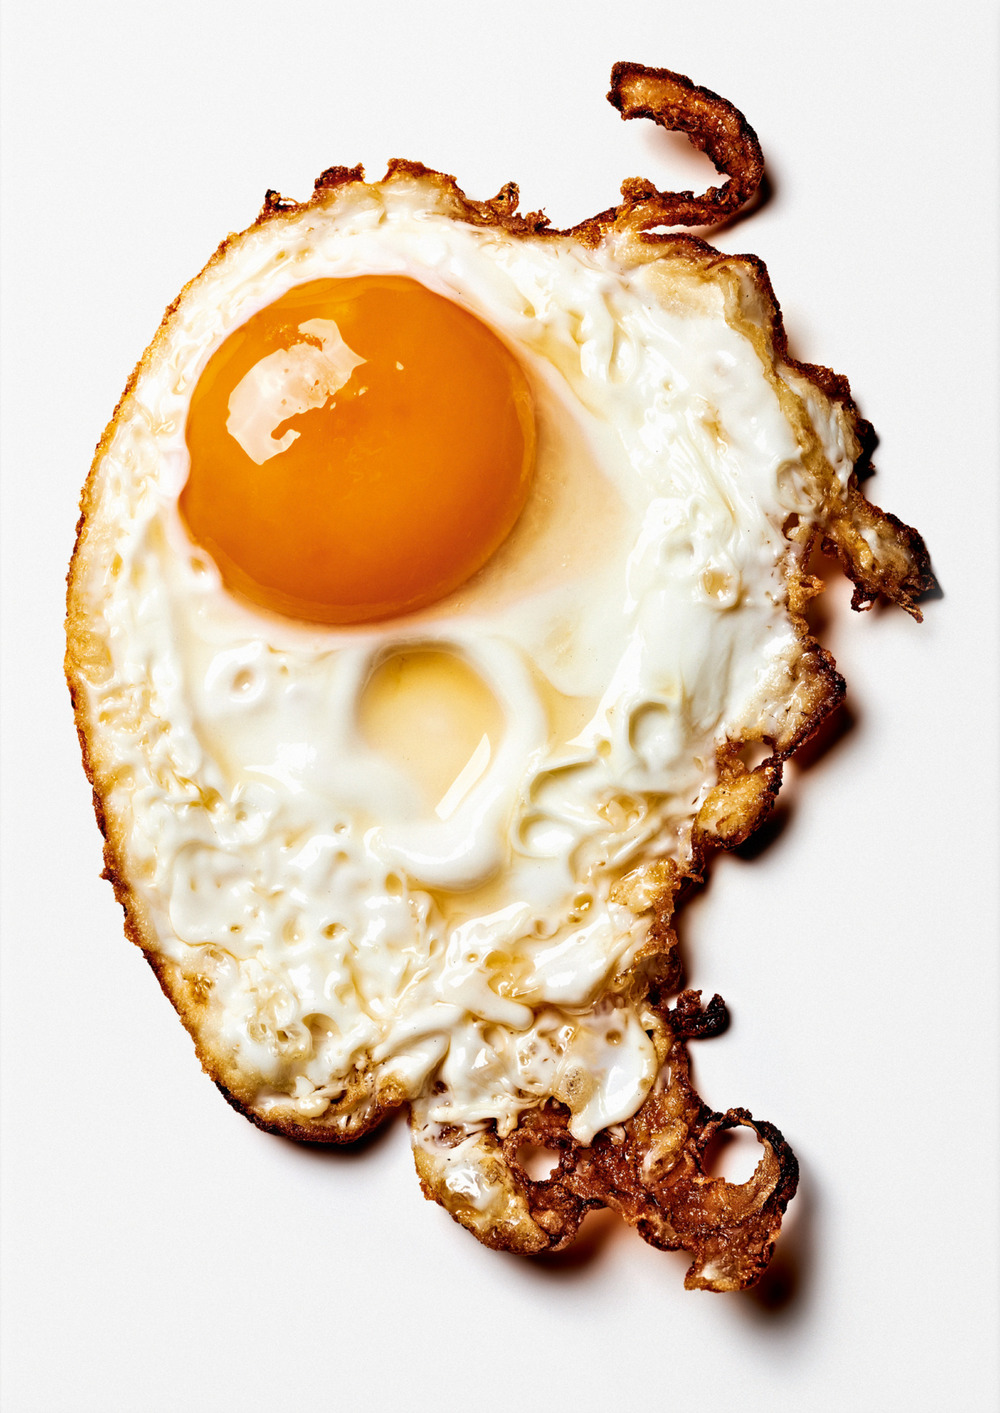 The gourmand's egg. A collection of stories & recipes. Ediz. illustrata